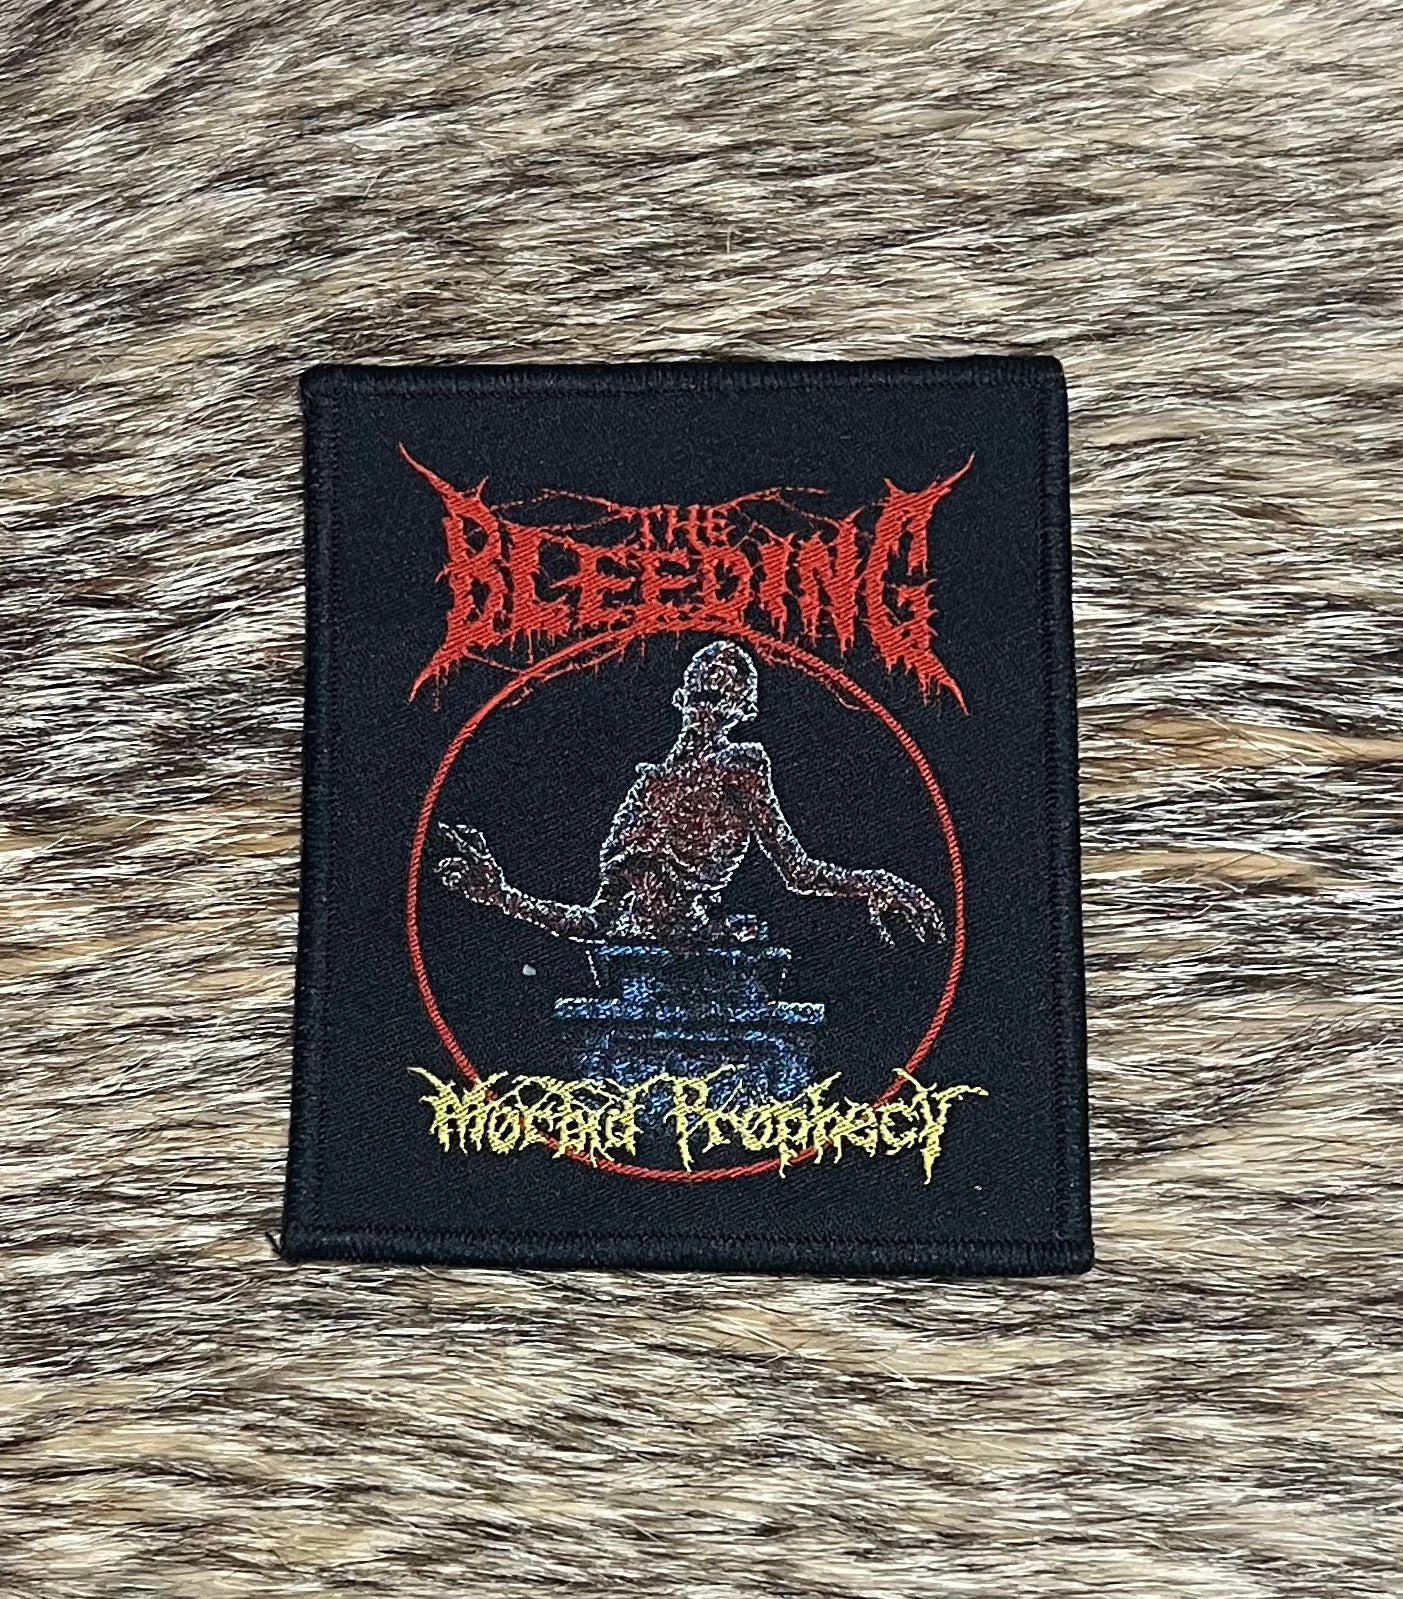 The Bleeding - Morbid Phrophecy